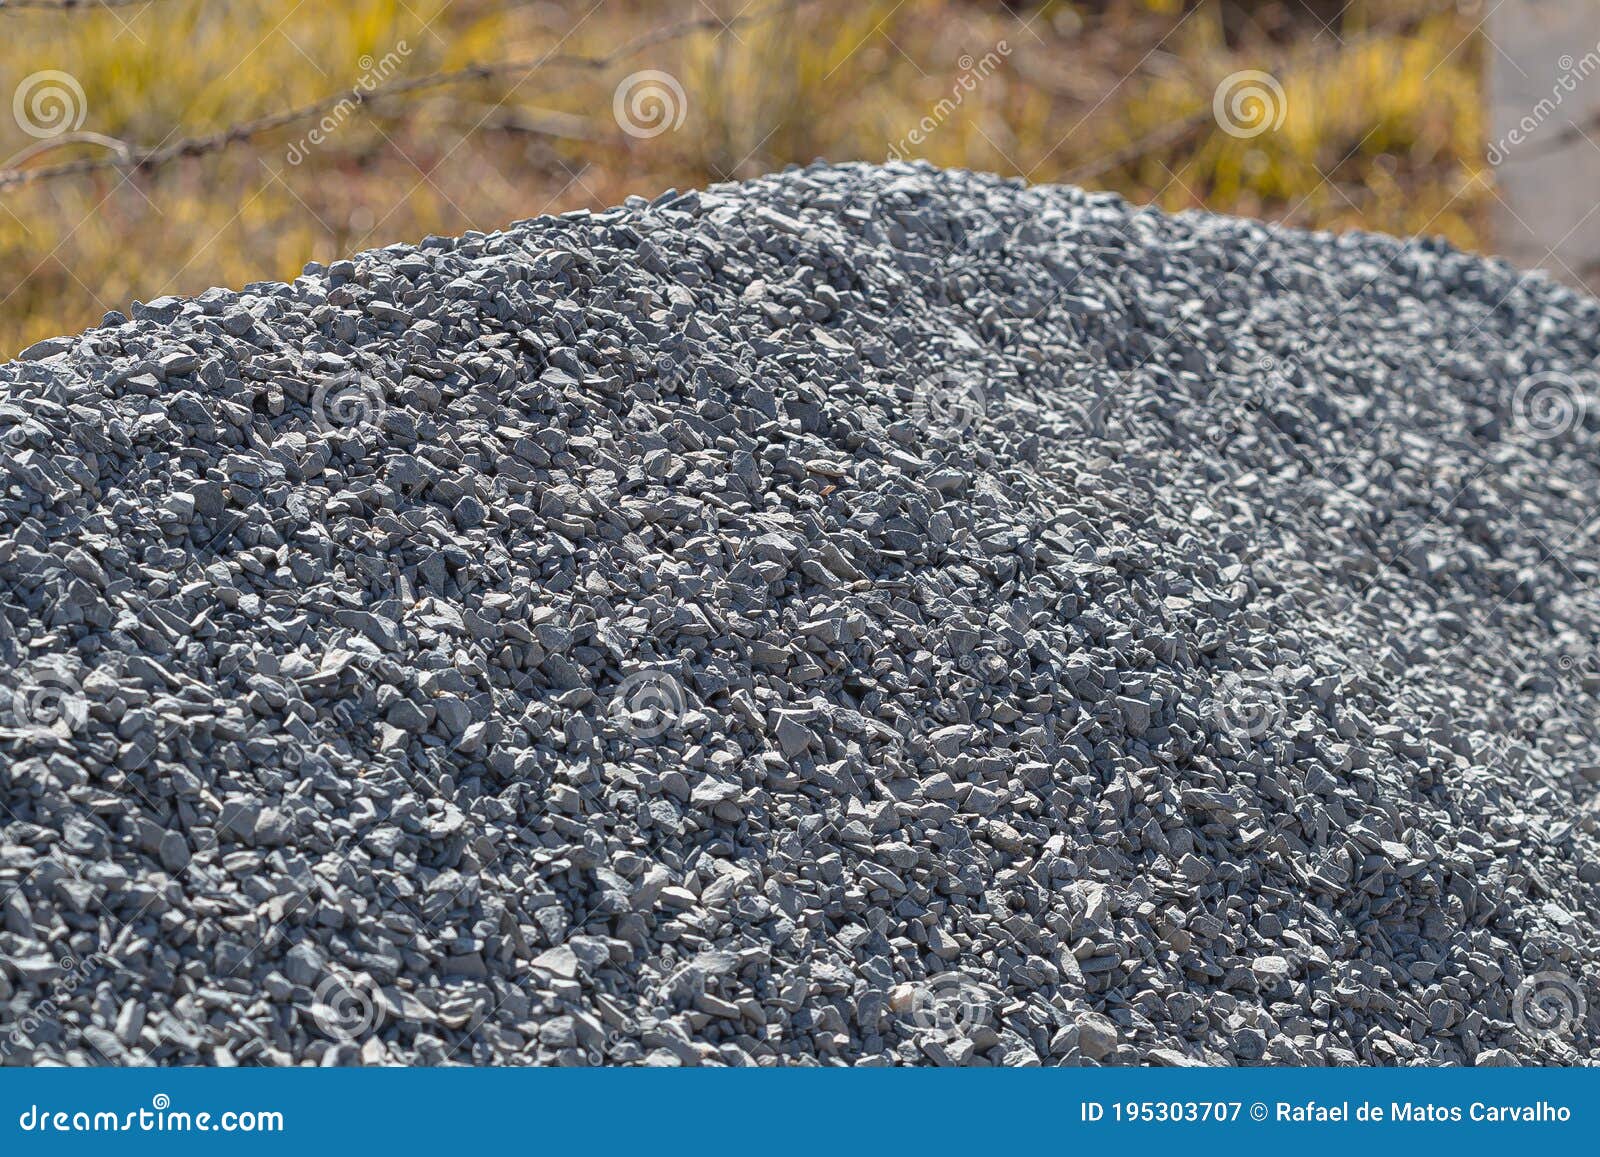 a lot of gravel stones - brita